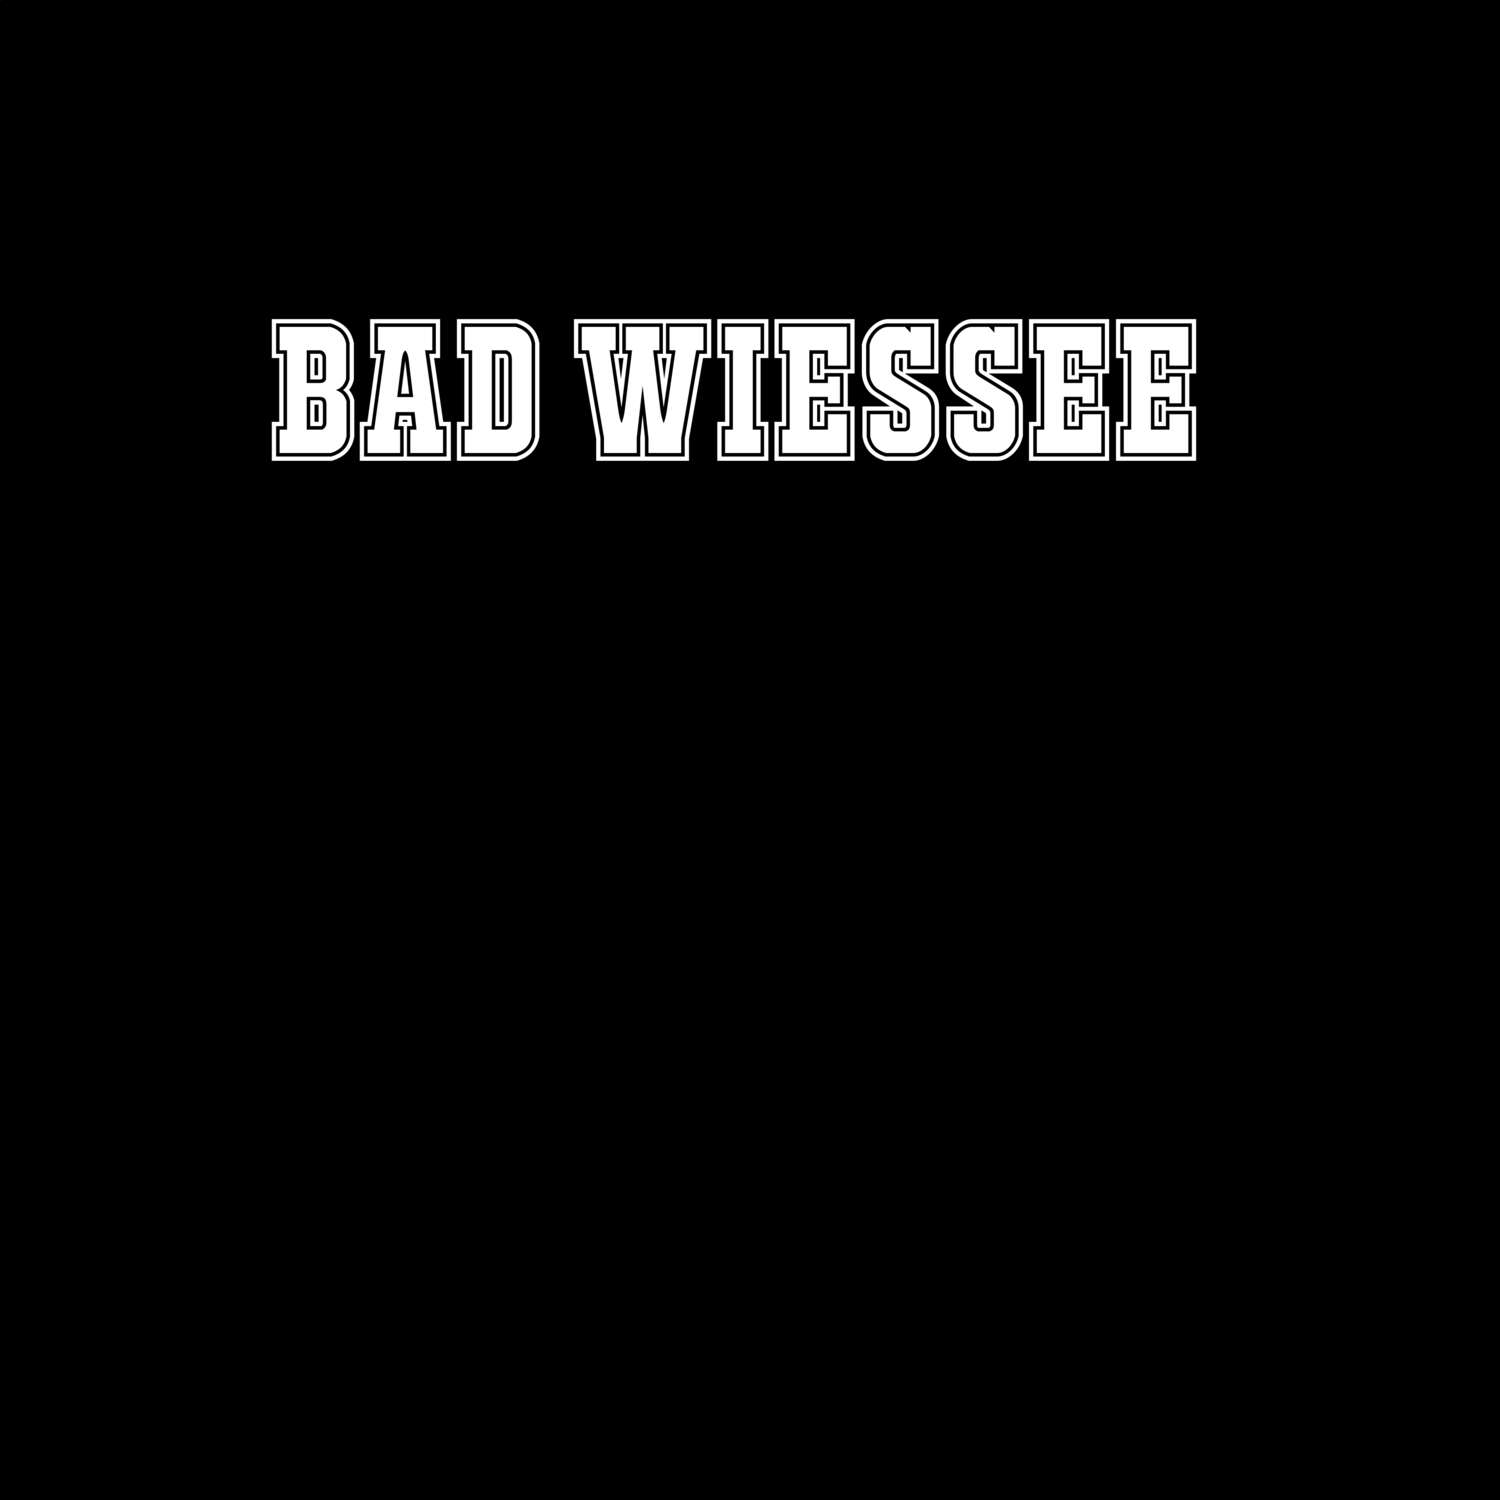 Bad Wiessee T-Shirt »Classic«